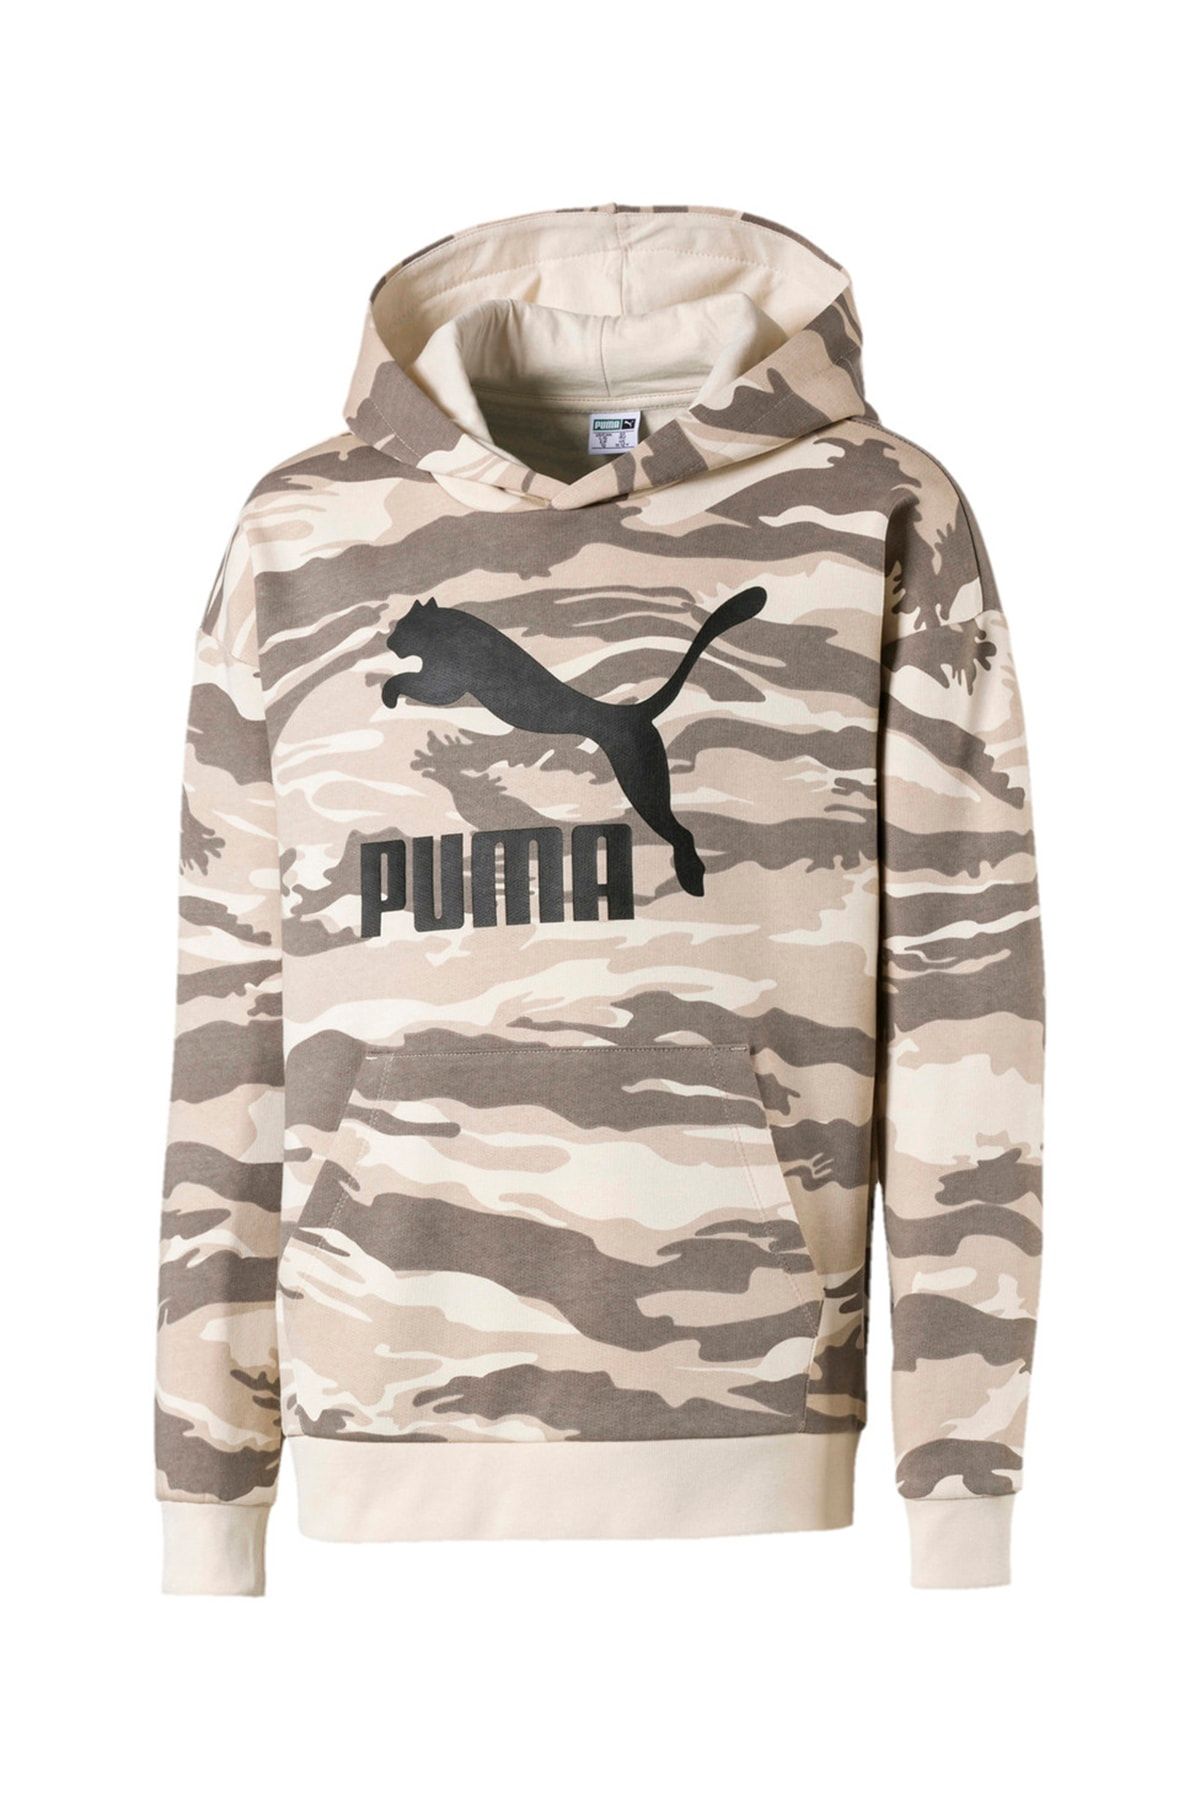 Puma Street Wear Camo Kapüşonlu Çocuk Sweatshirt